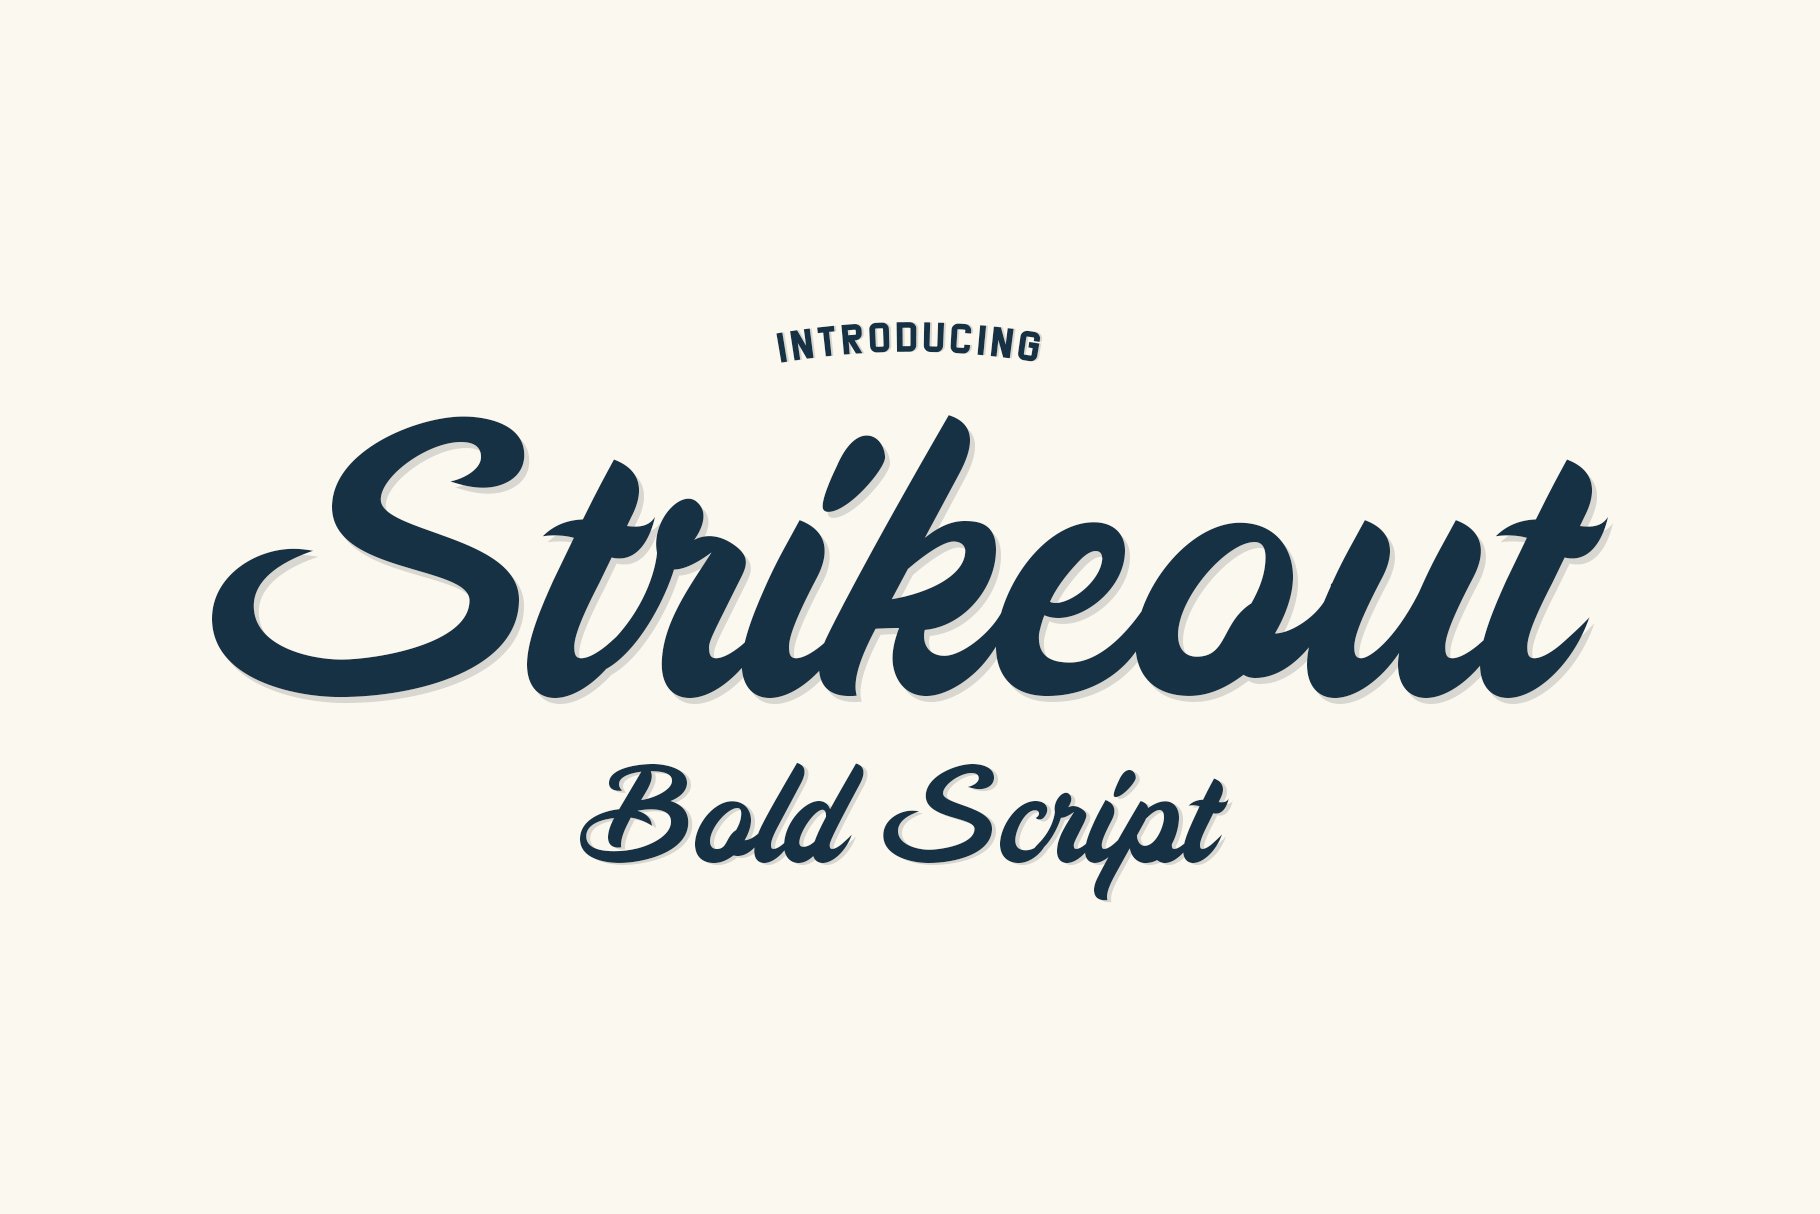 Strikeout - Bold Script cover image.